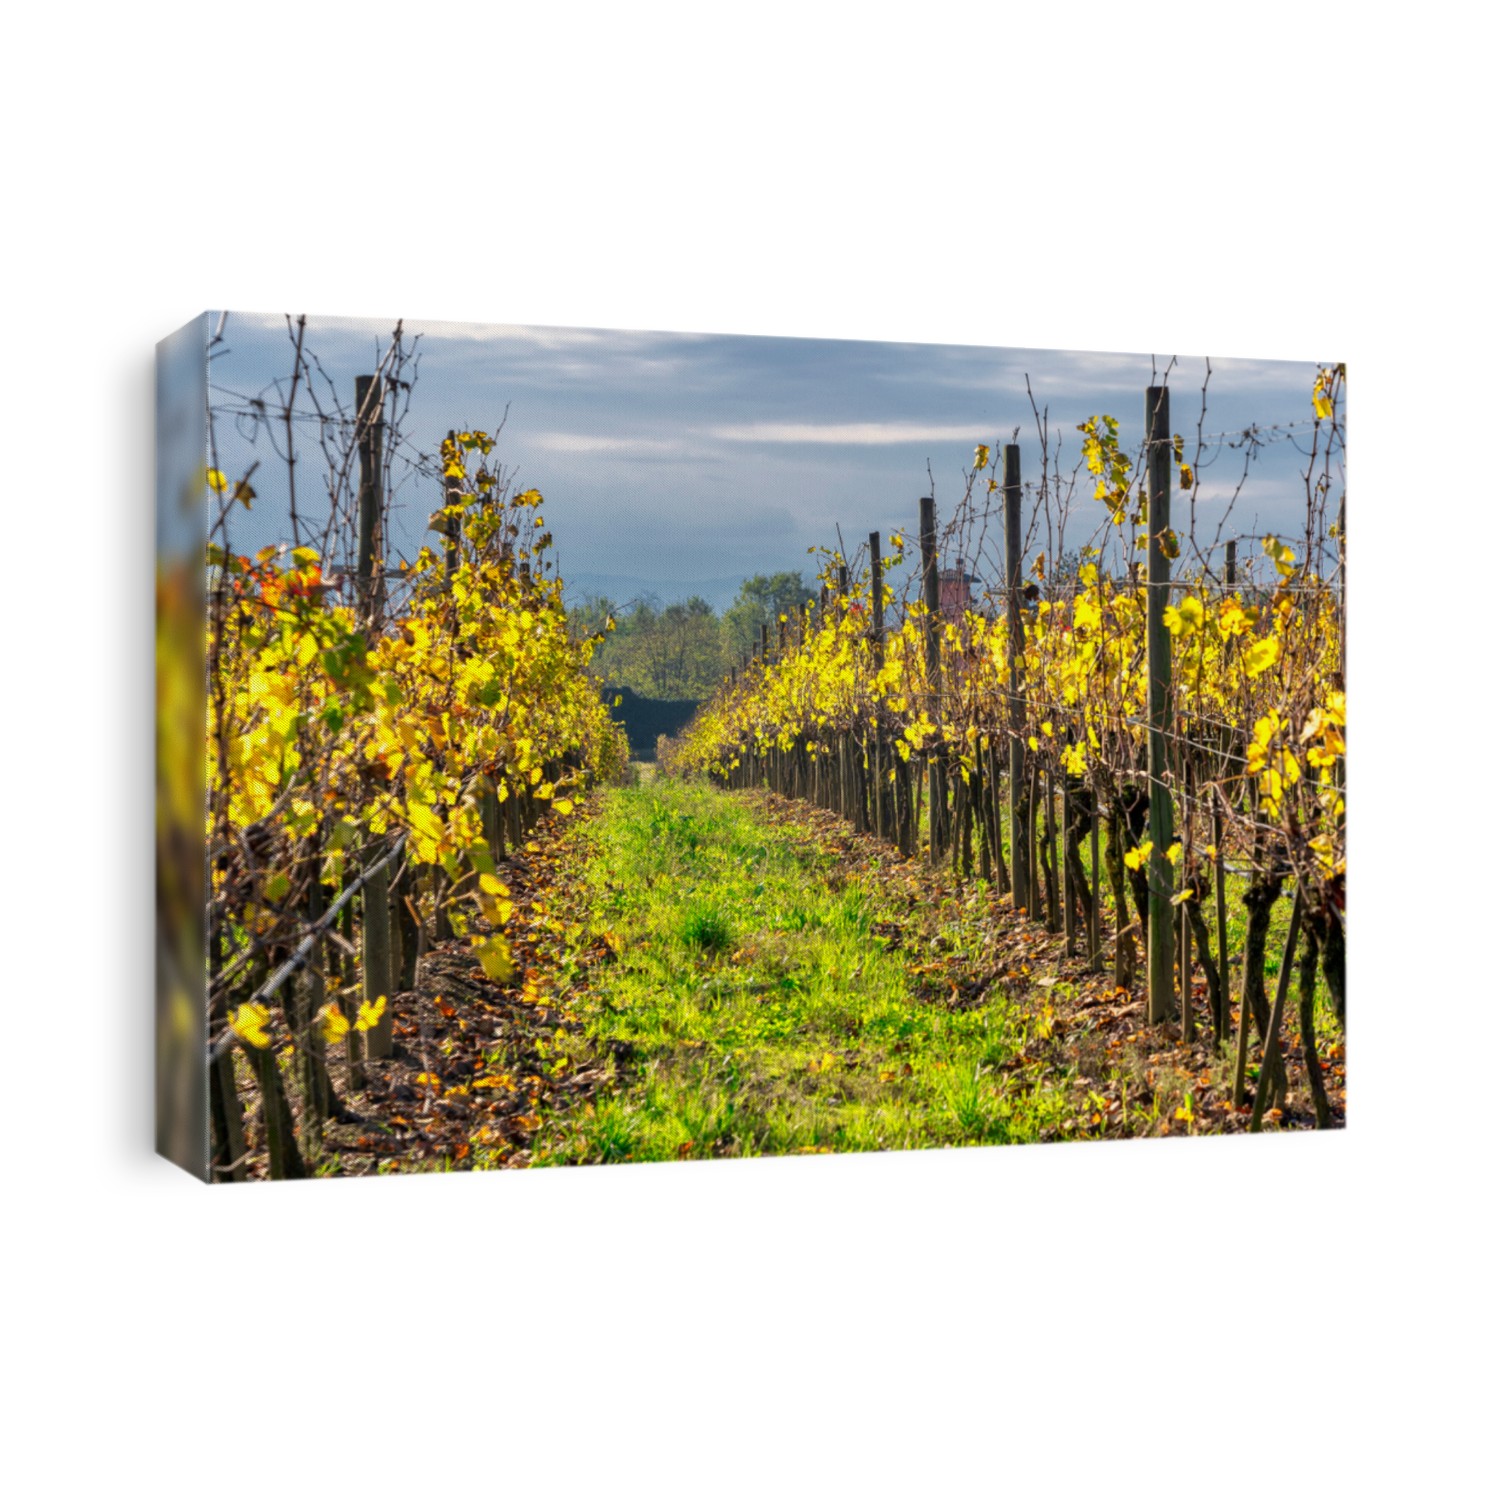 Vineyards of the San Colombano al Lambro hill, Milan, Lombardy, Italy, at fall